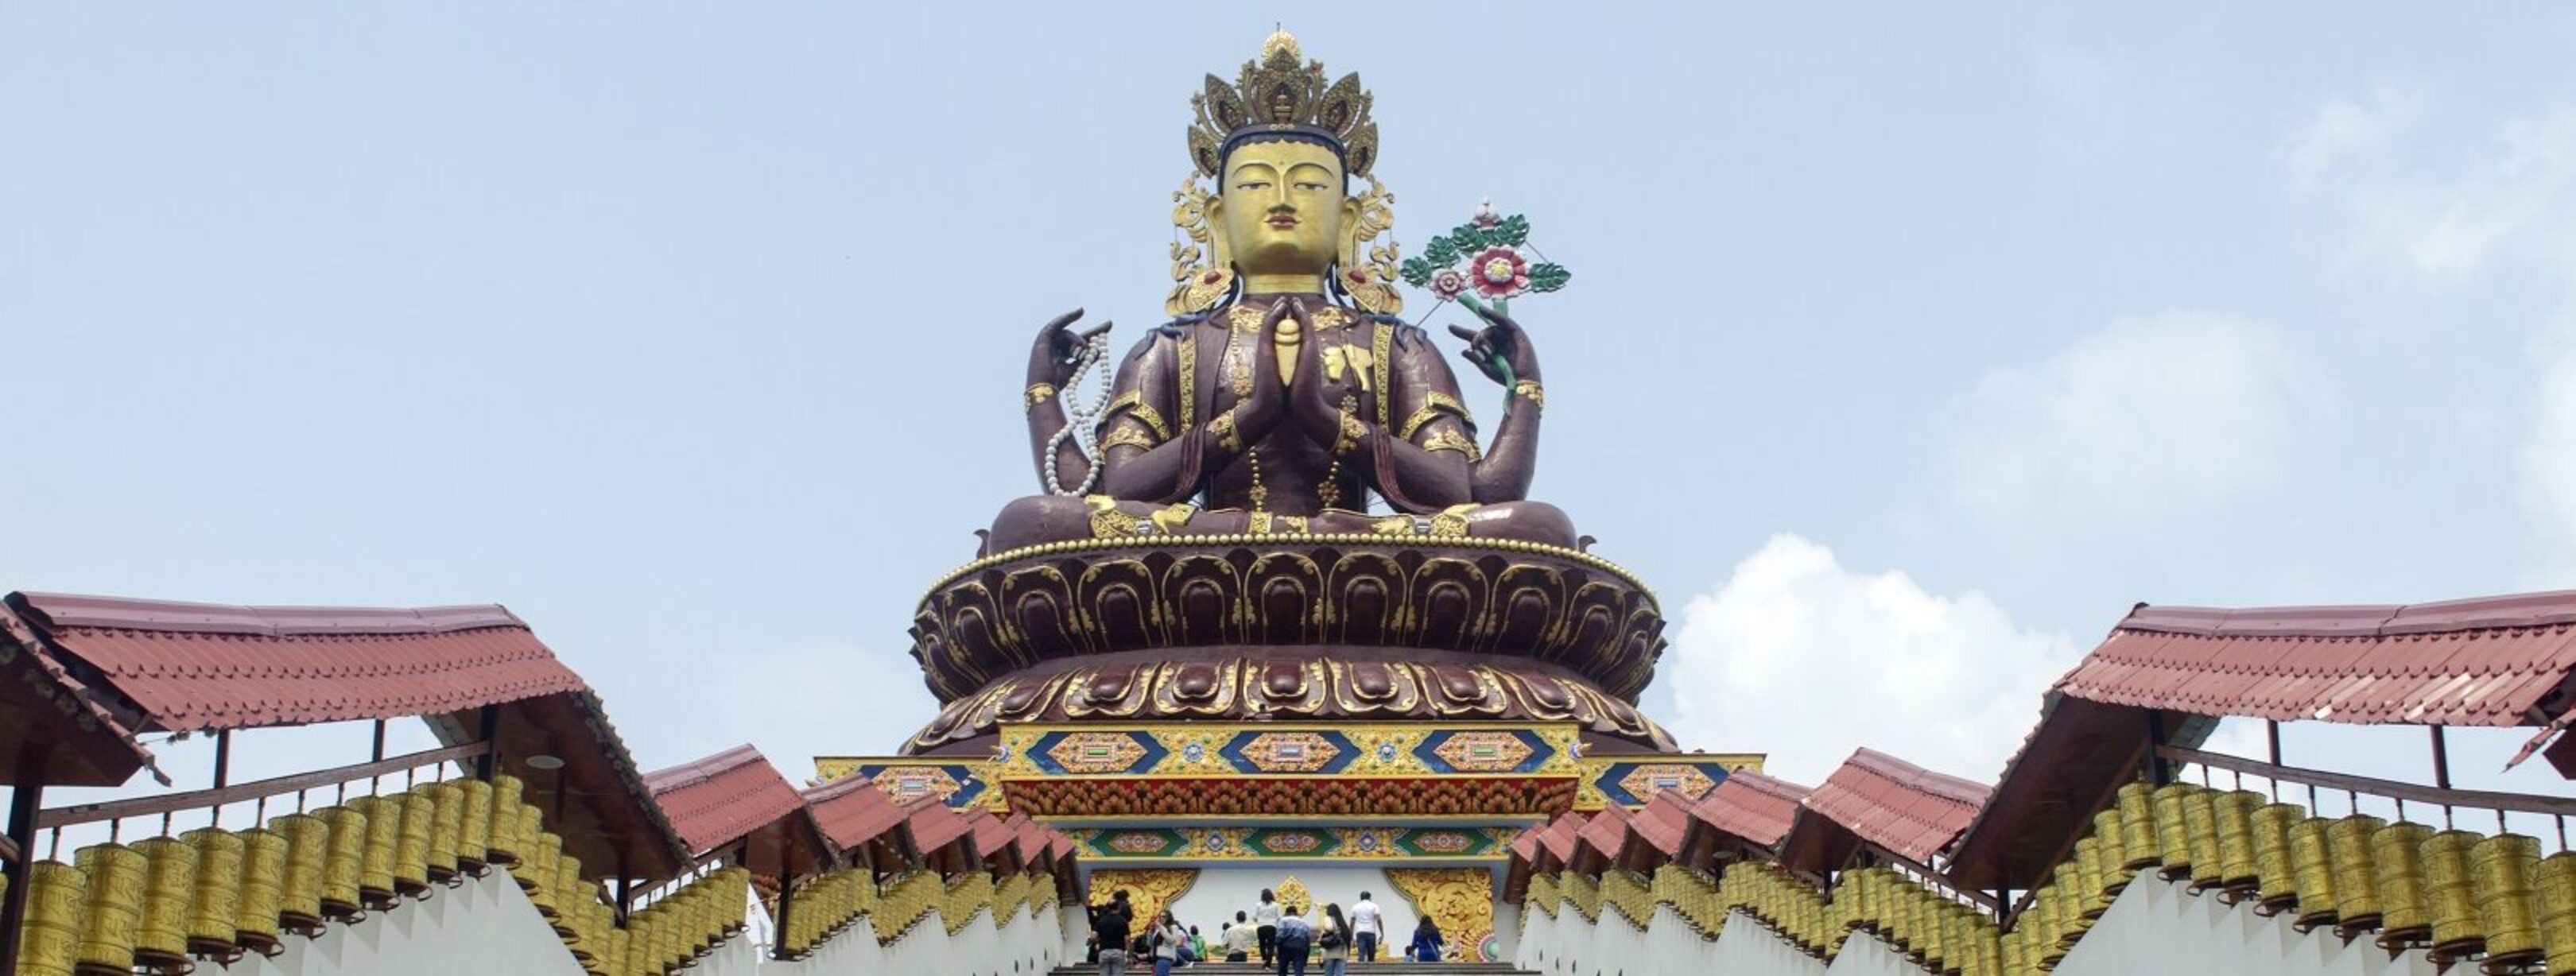 1620-Statue of Chenrezig__Sikkim India_WikimediaCommons